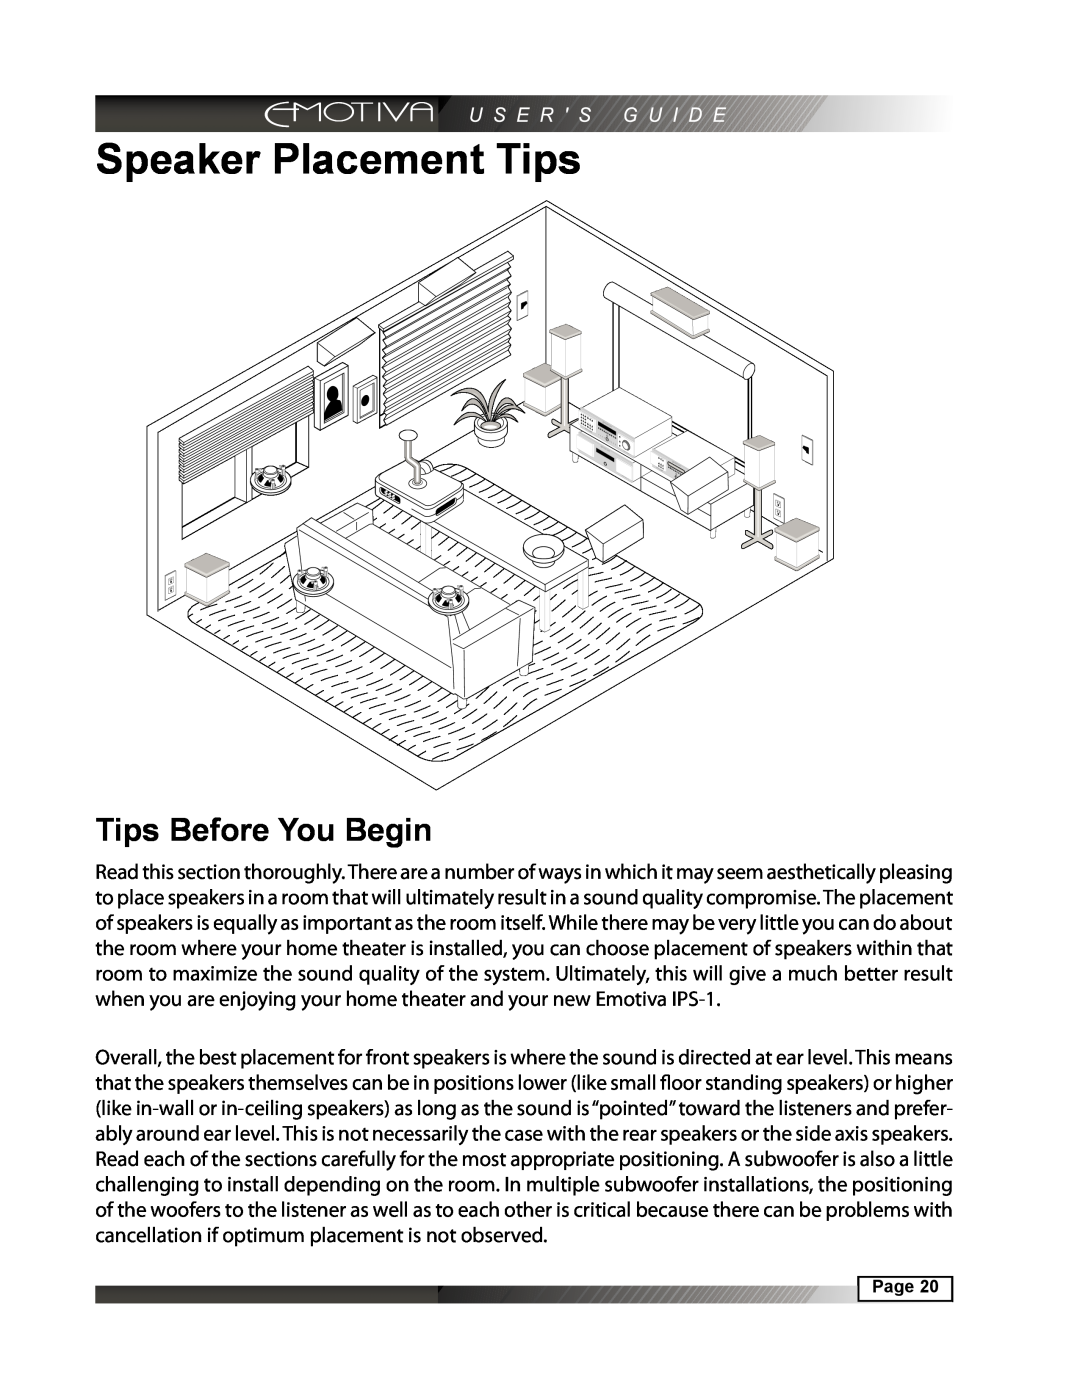 Emotiva IPS-1 manual Speaker Placement Tips, Tips Before You Begin 